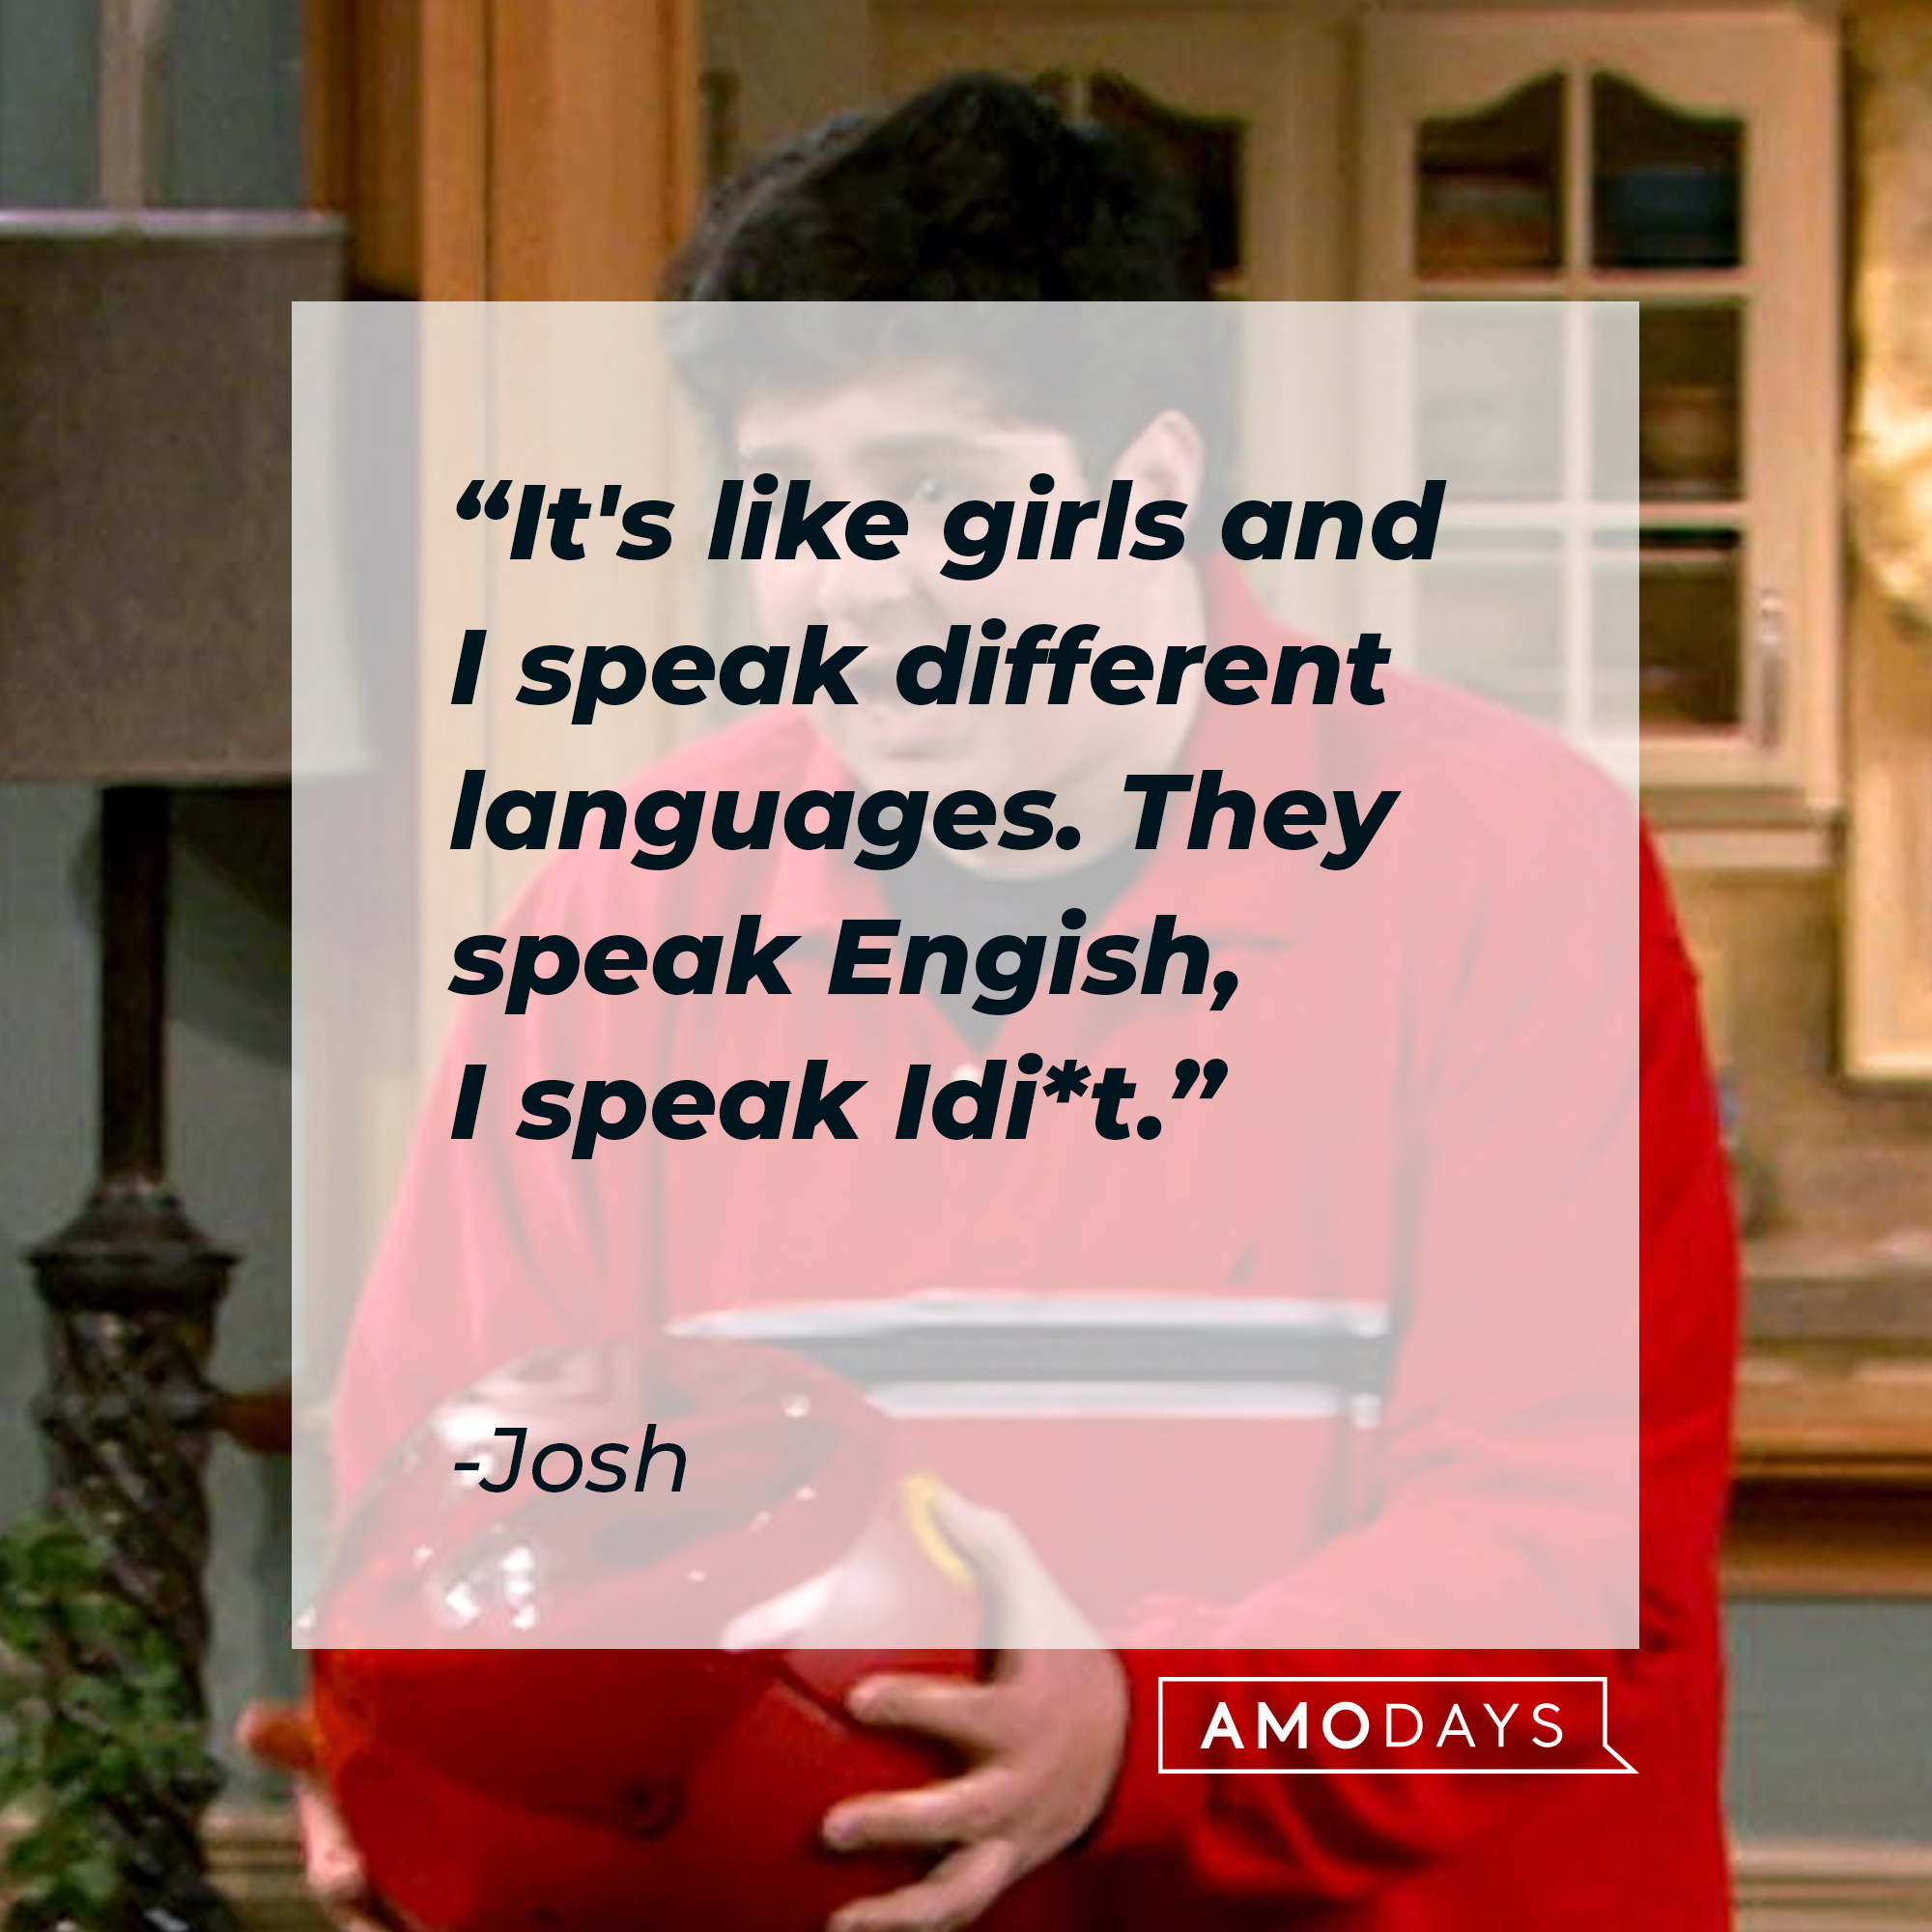 Josh's quote, "It's like girls and I speak different languages. They speak English, I speak Idi*t." | Source: facebook.com/Drake & Josh